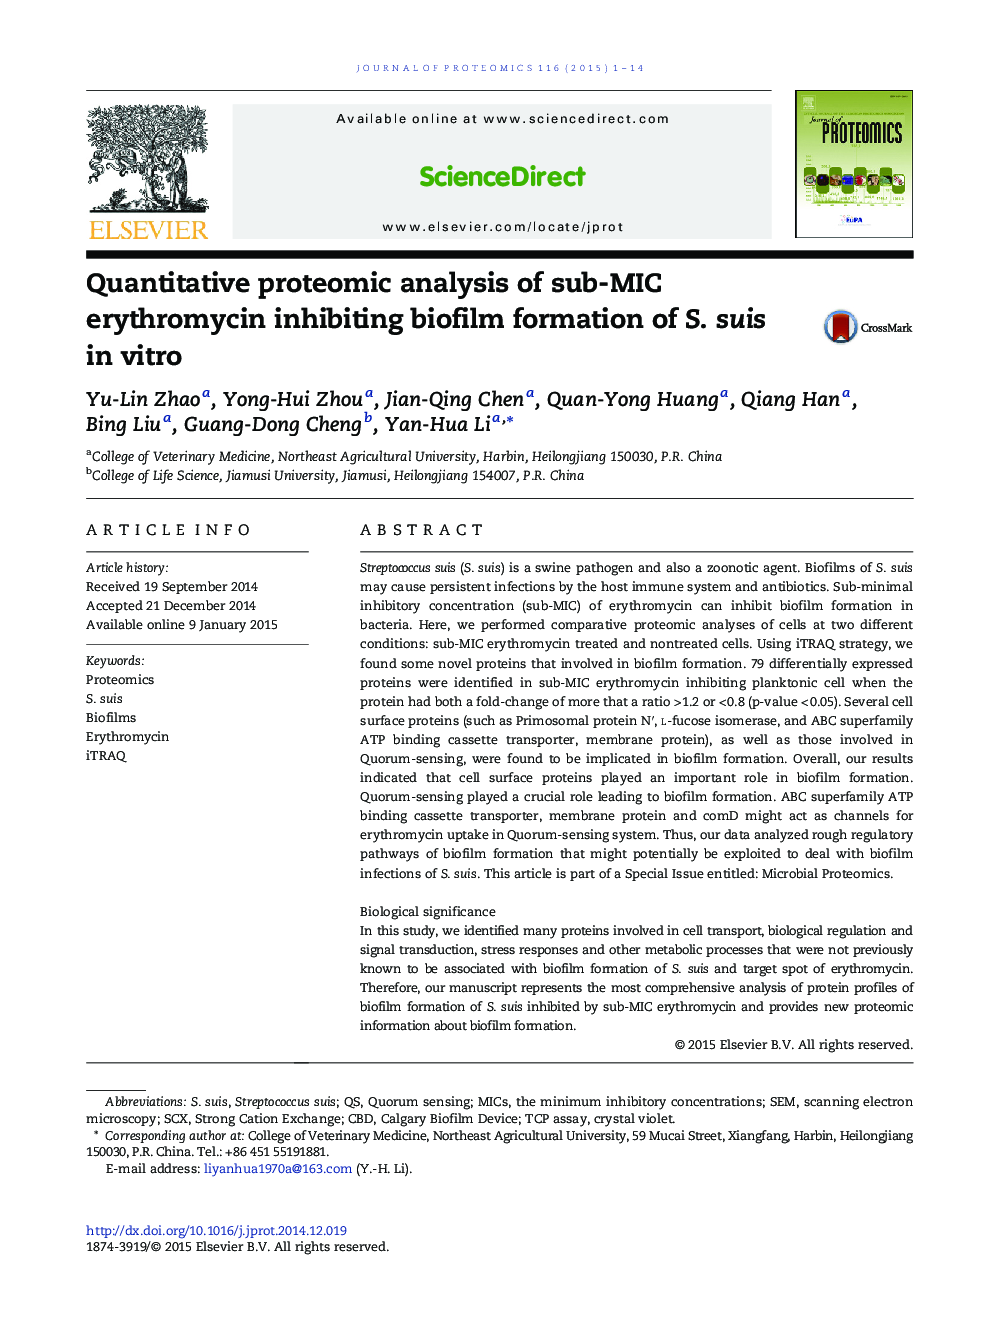 Quantitative proteomic analysis of sub-MIC erythromycin inhibiting biofilm formation of S. suis in vitro